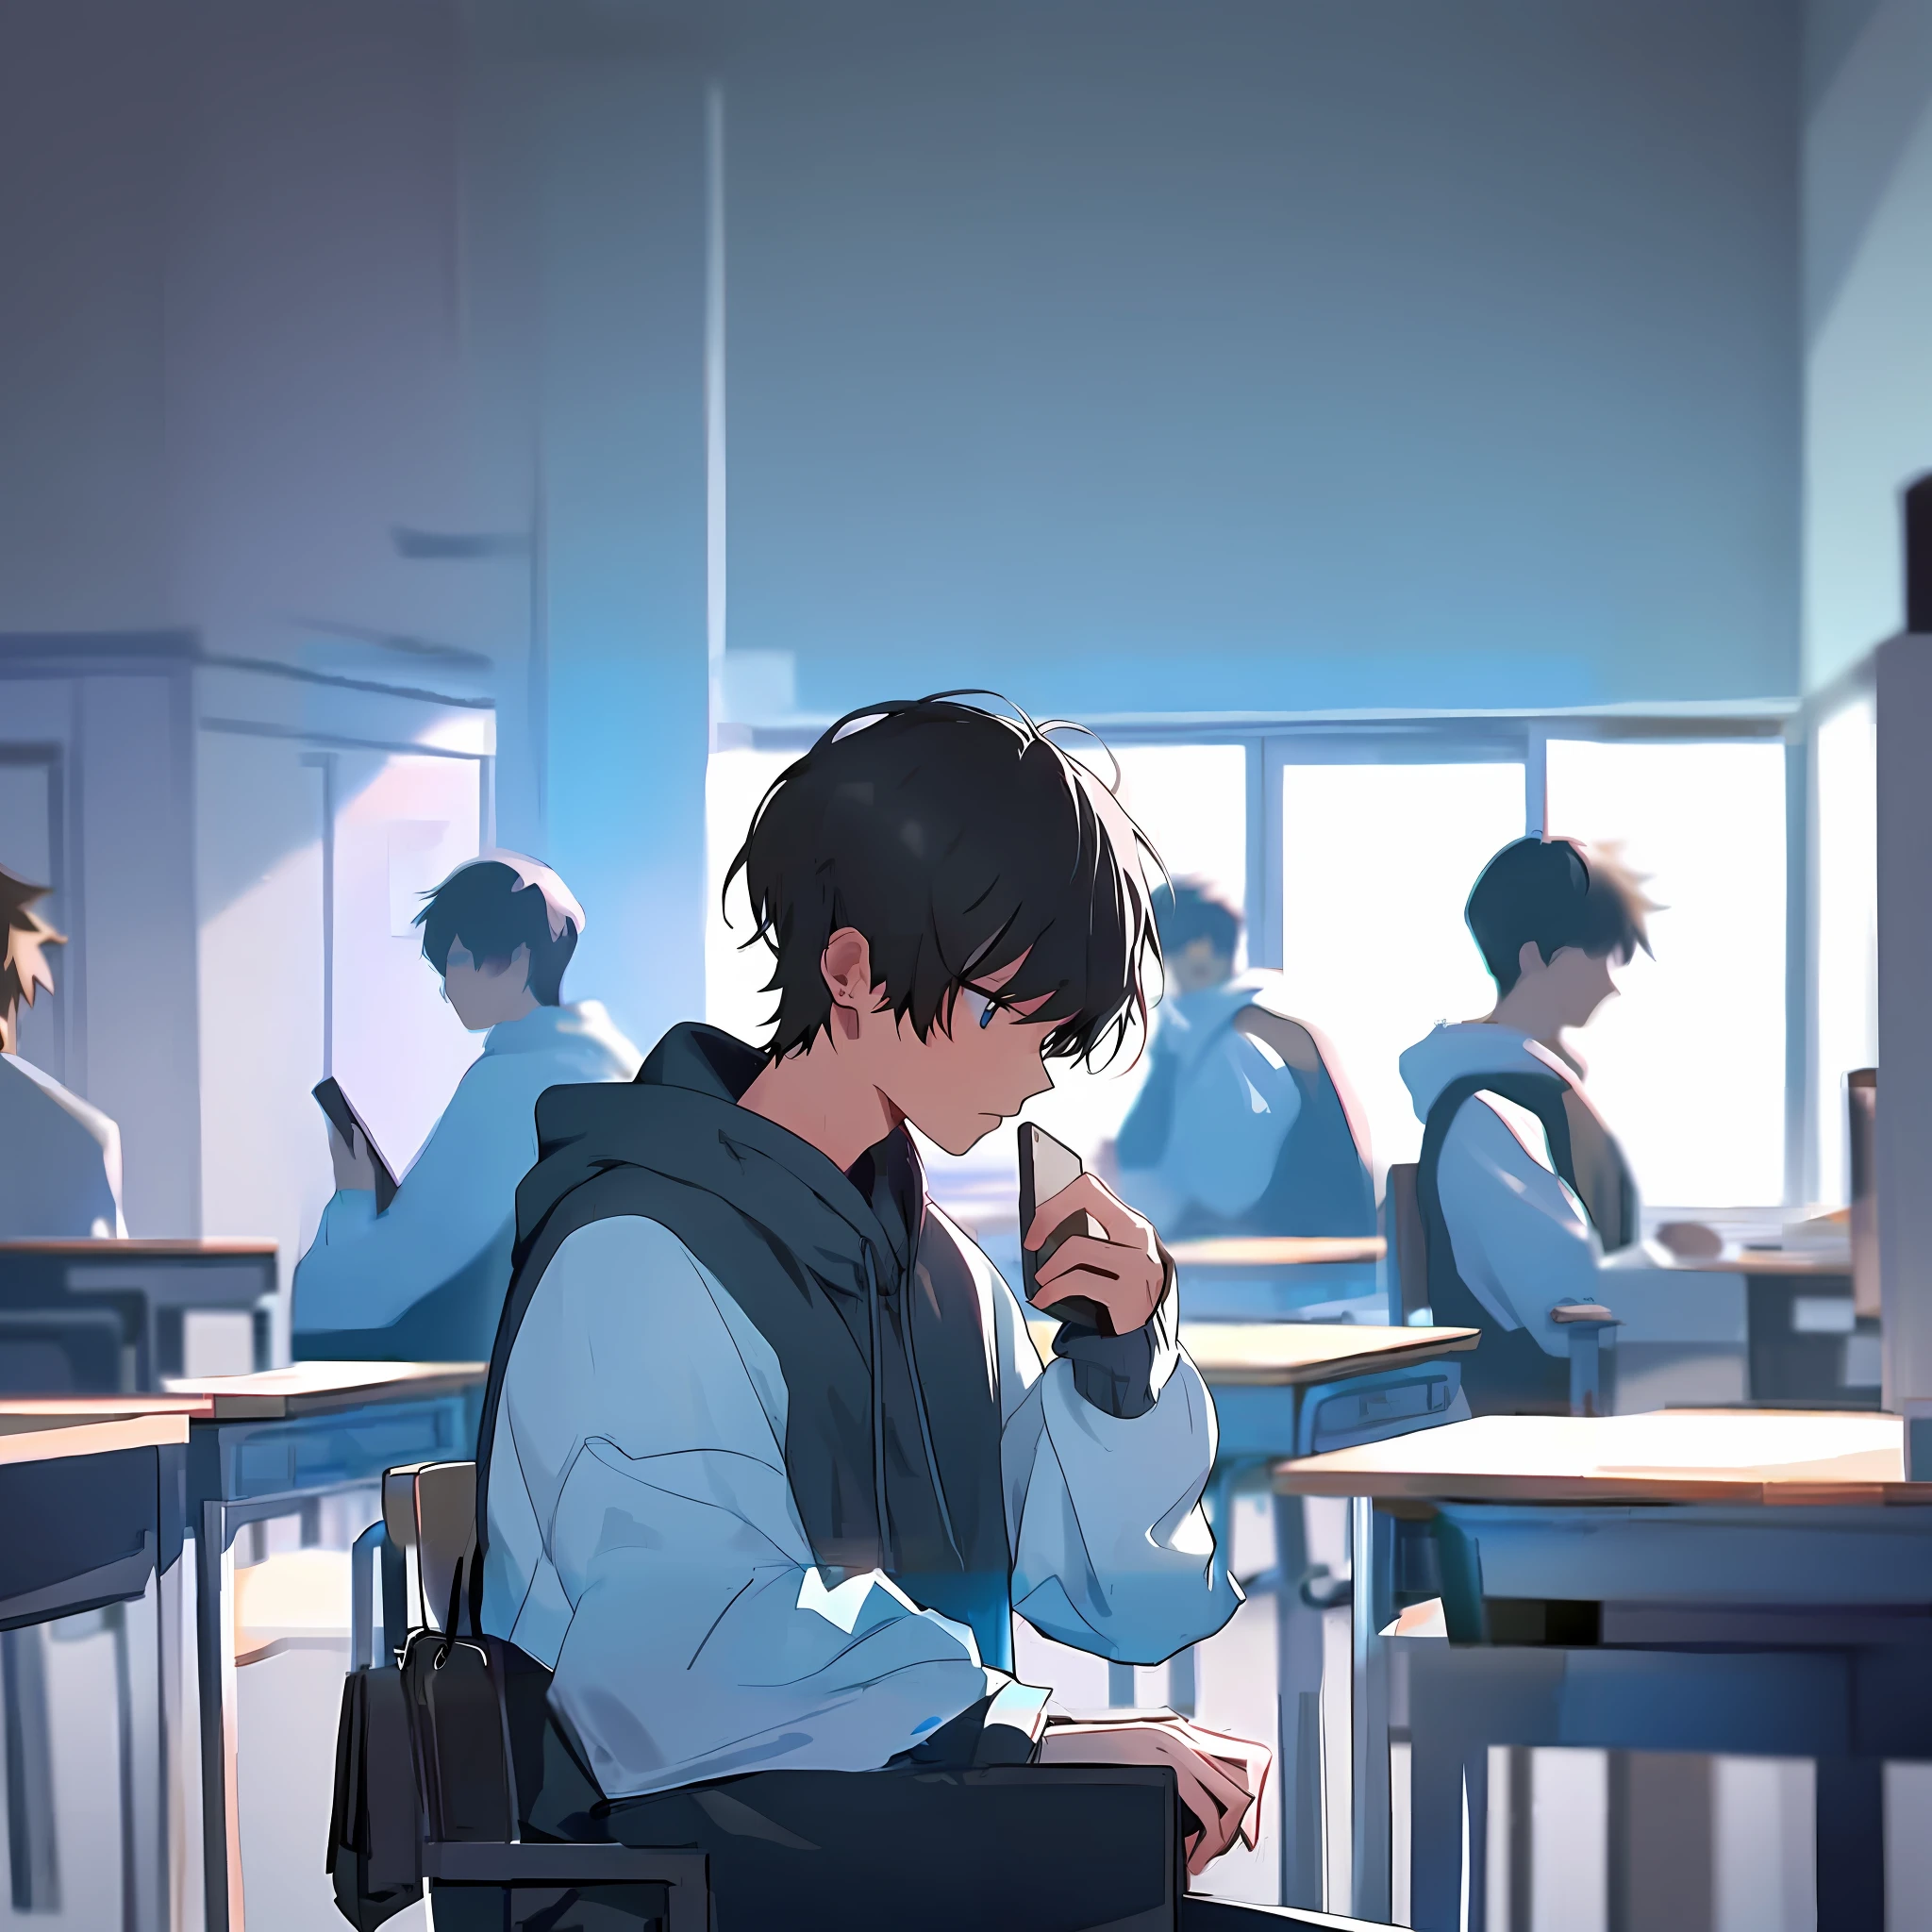 anime boy sitting 在教室里 with a laptop and a book, 动漫艺术壁纸 8k, 动漫艺术壁纸4k, 动漫艺术壁纸 4k, 站在课堂上, 在教室里, guweiz 风格的艺术品, 新海诚. 数字渲染, 4k动漫壁纸, 动漫壁纸4K, 动漫壁纸4k, 高中背景